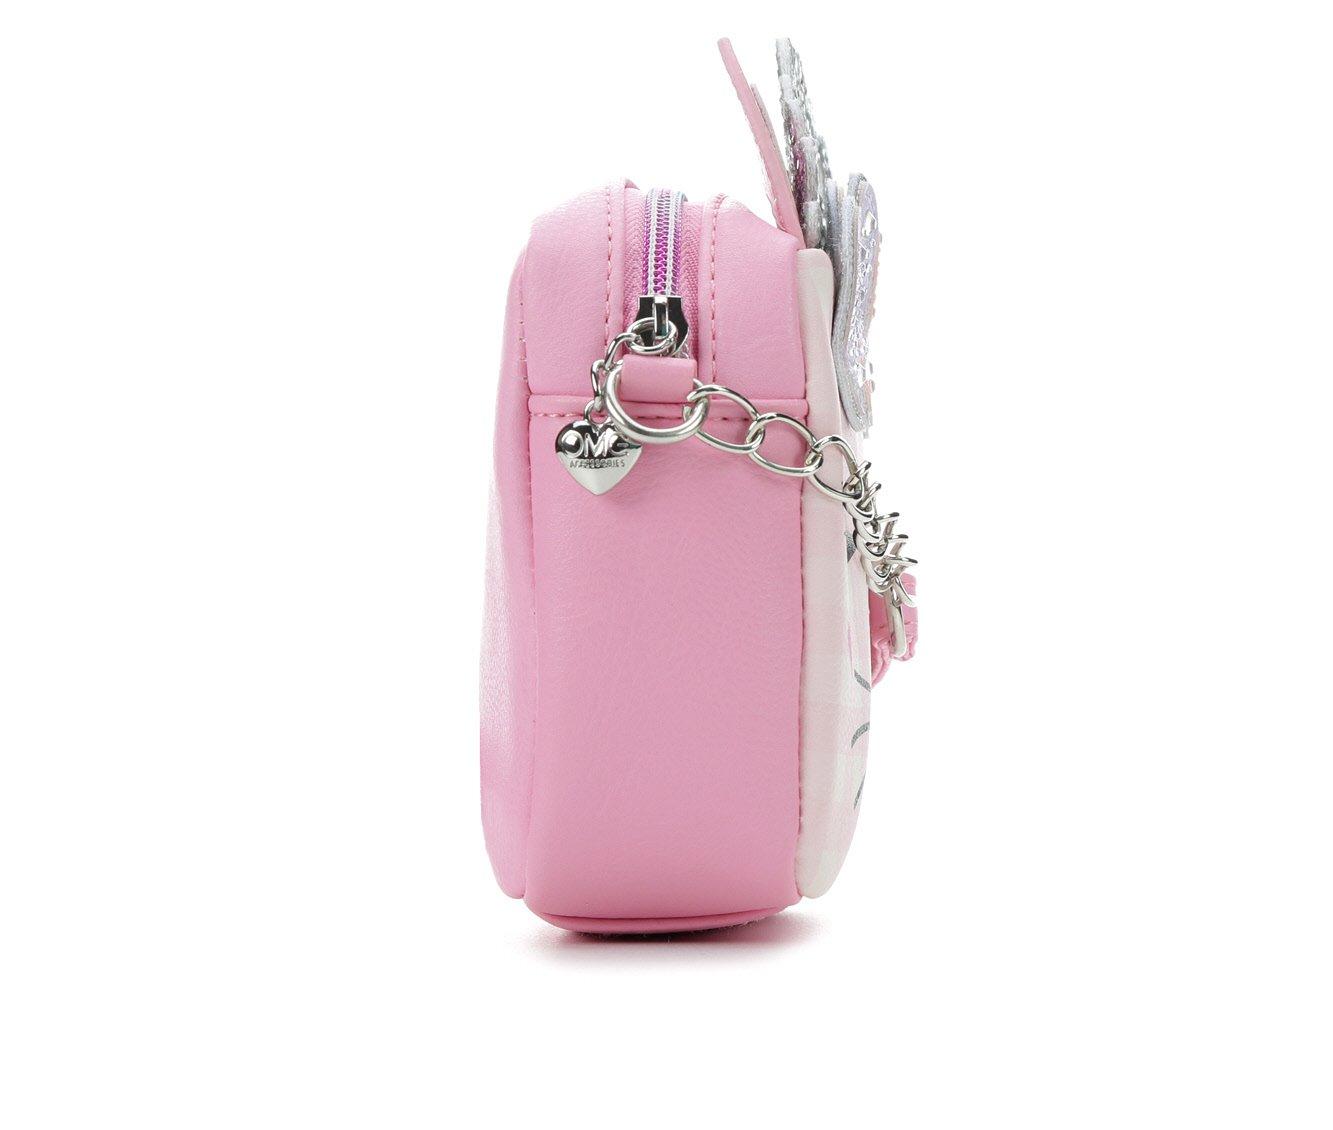 OMG Accessories Bella Gingham Crossbody Handbag